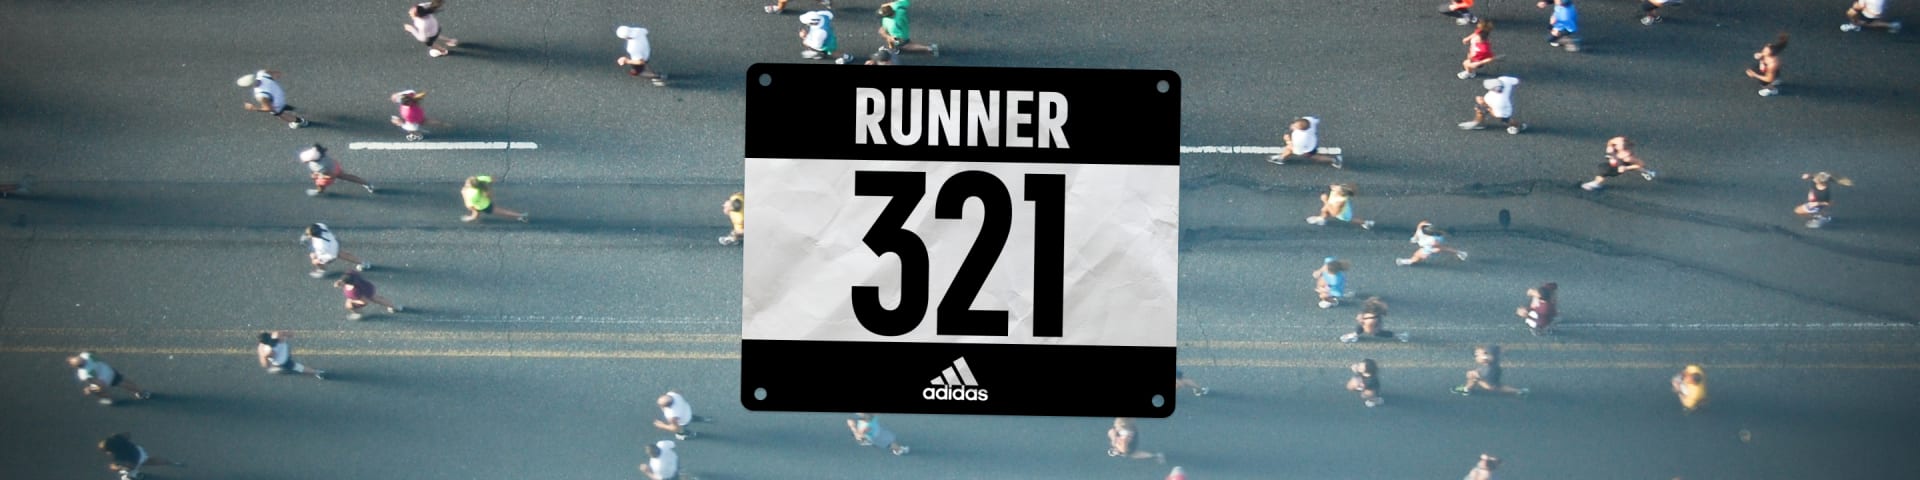 runner 321 adidas case study